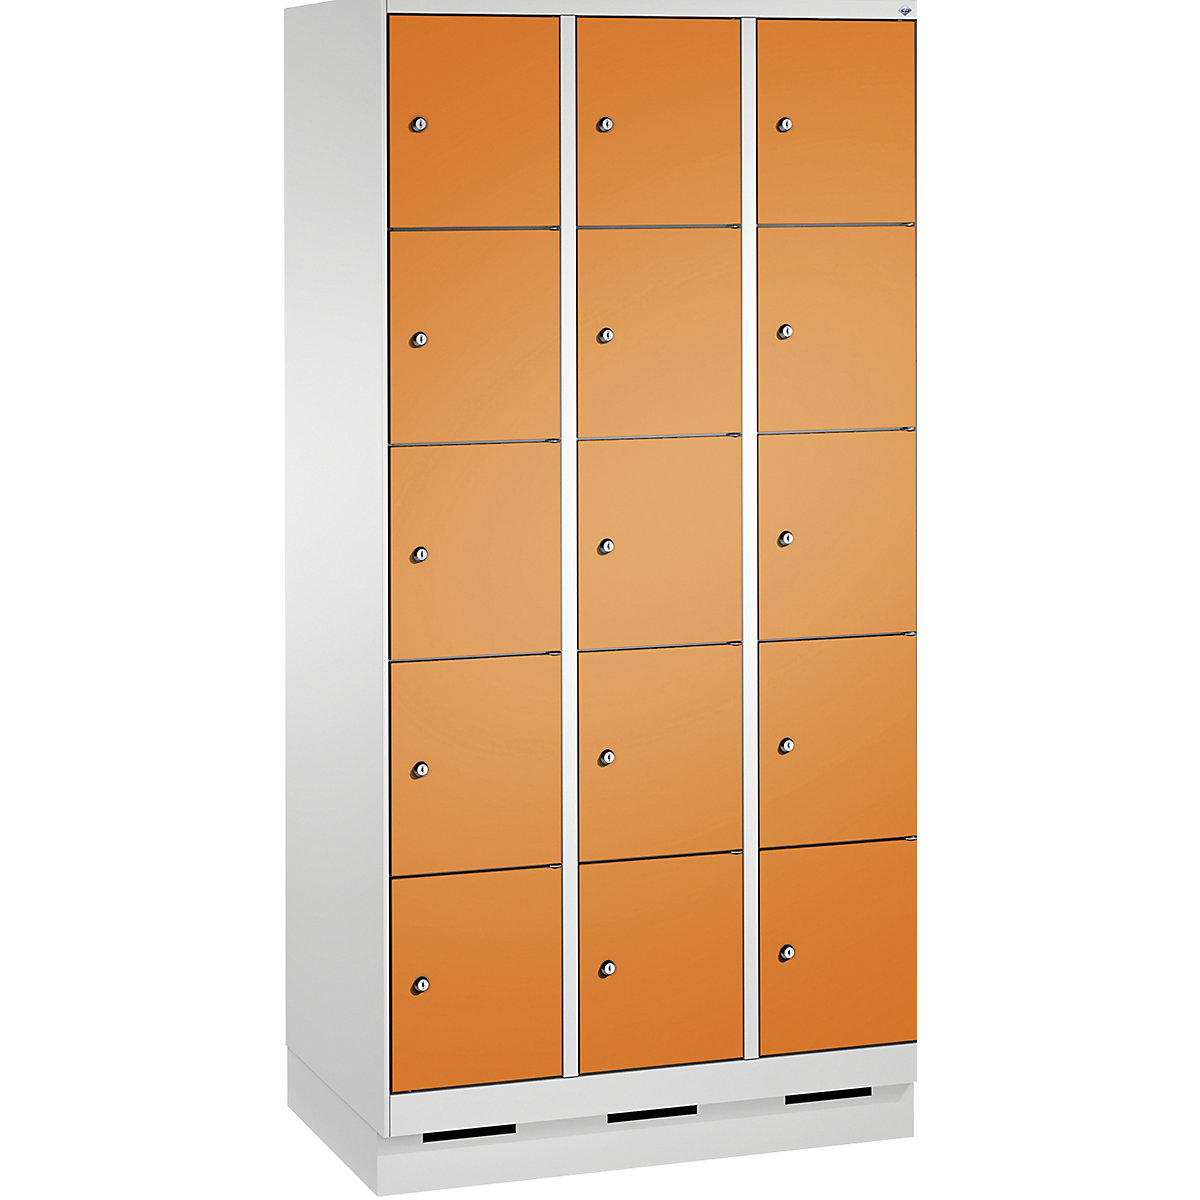 EVOLO locker unit, with plinth – C+P, 3 compartments, 5 shelf compartments each, compartment width 300 mm, light grey / yellow orange